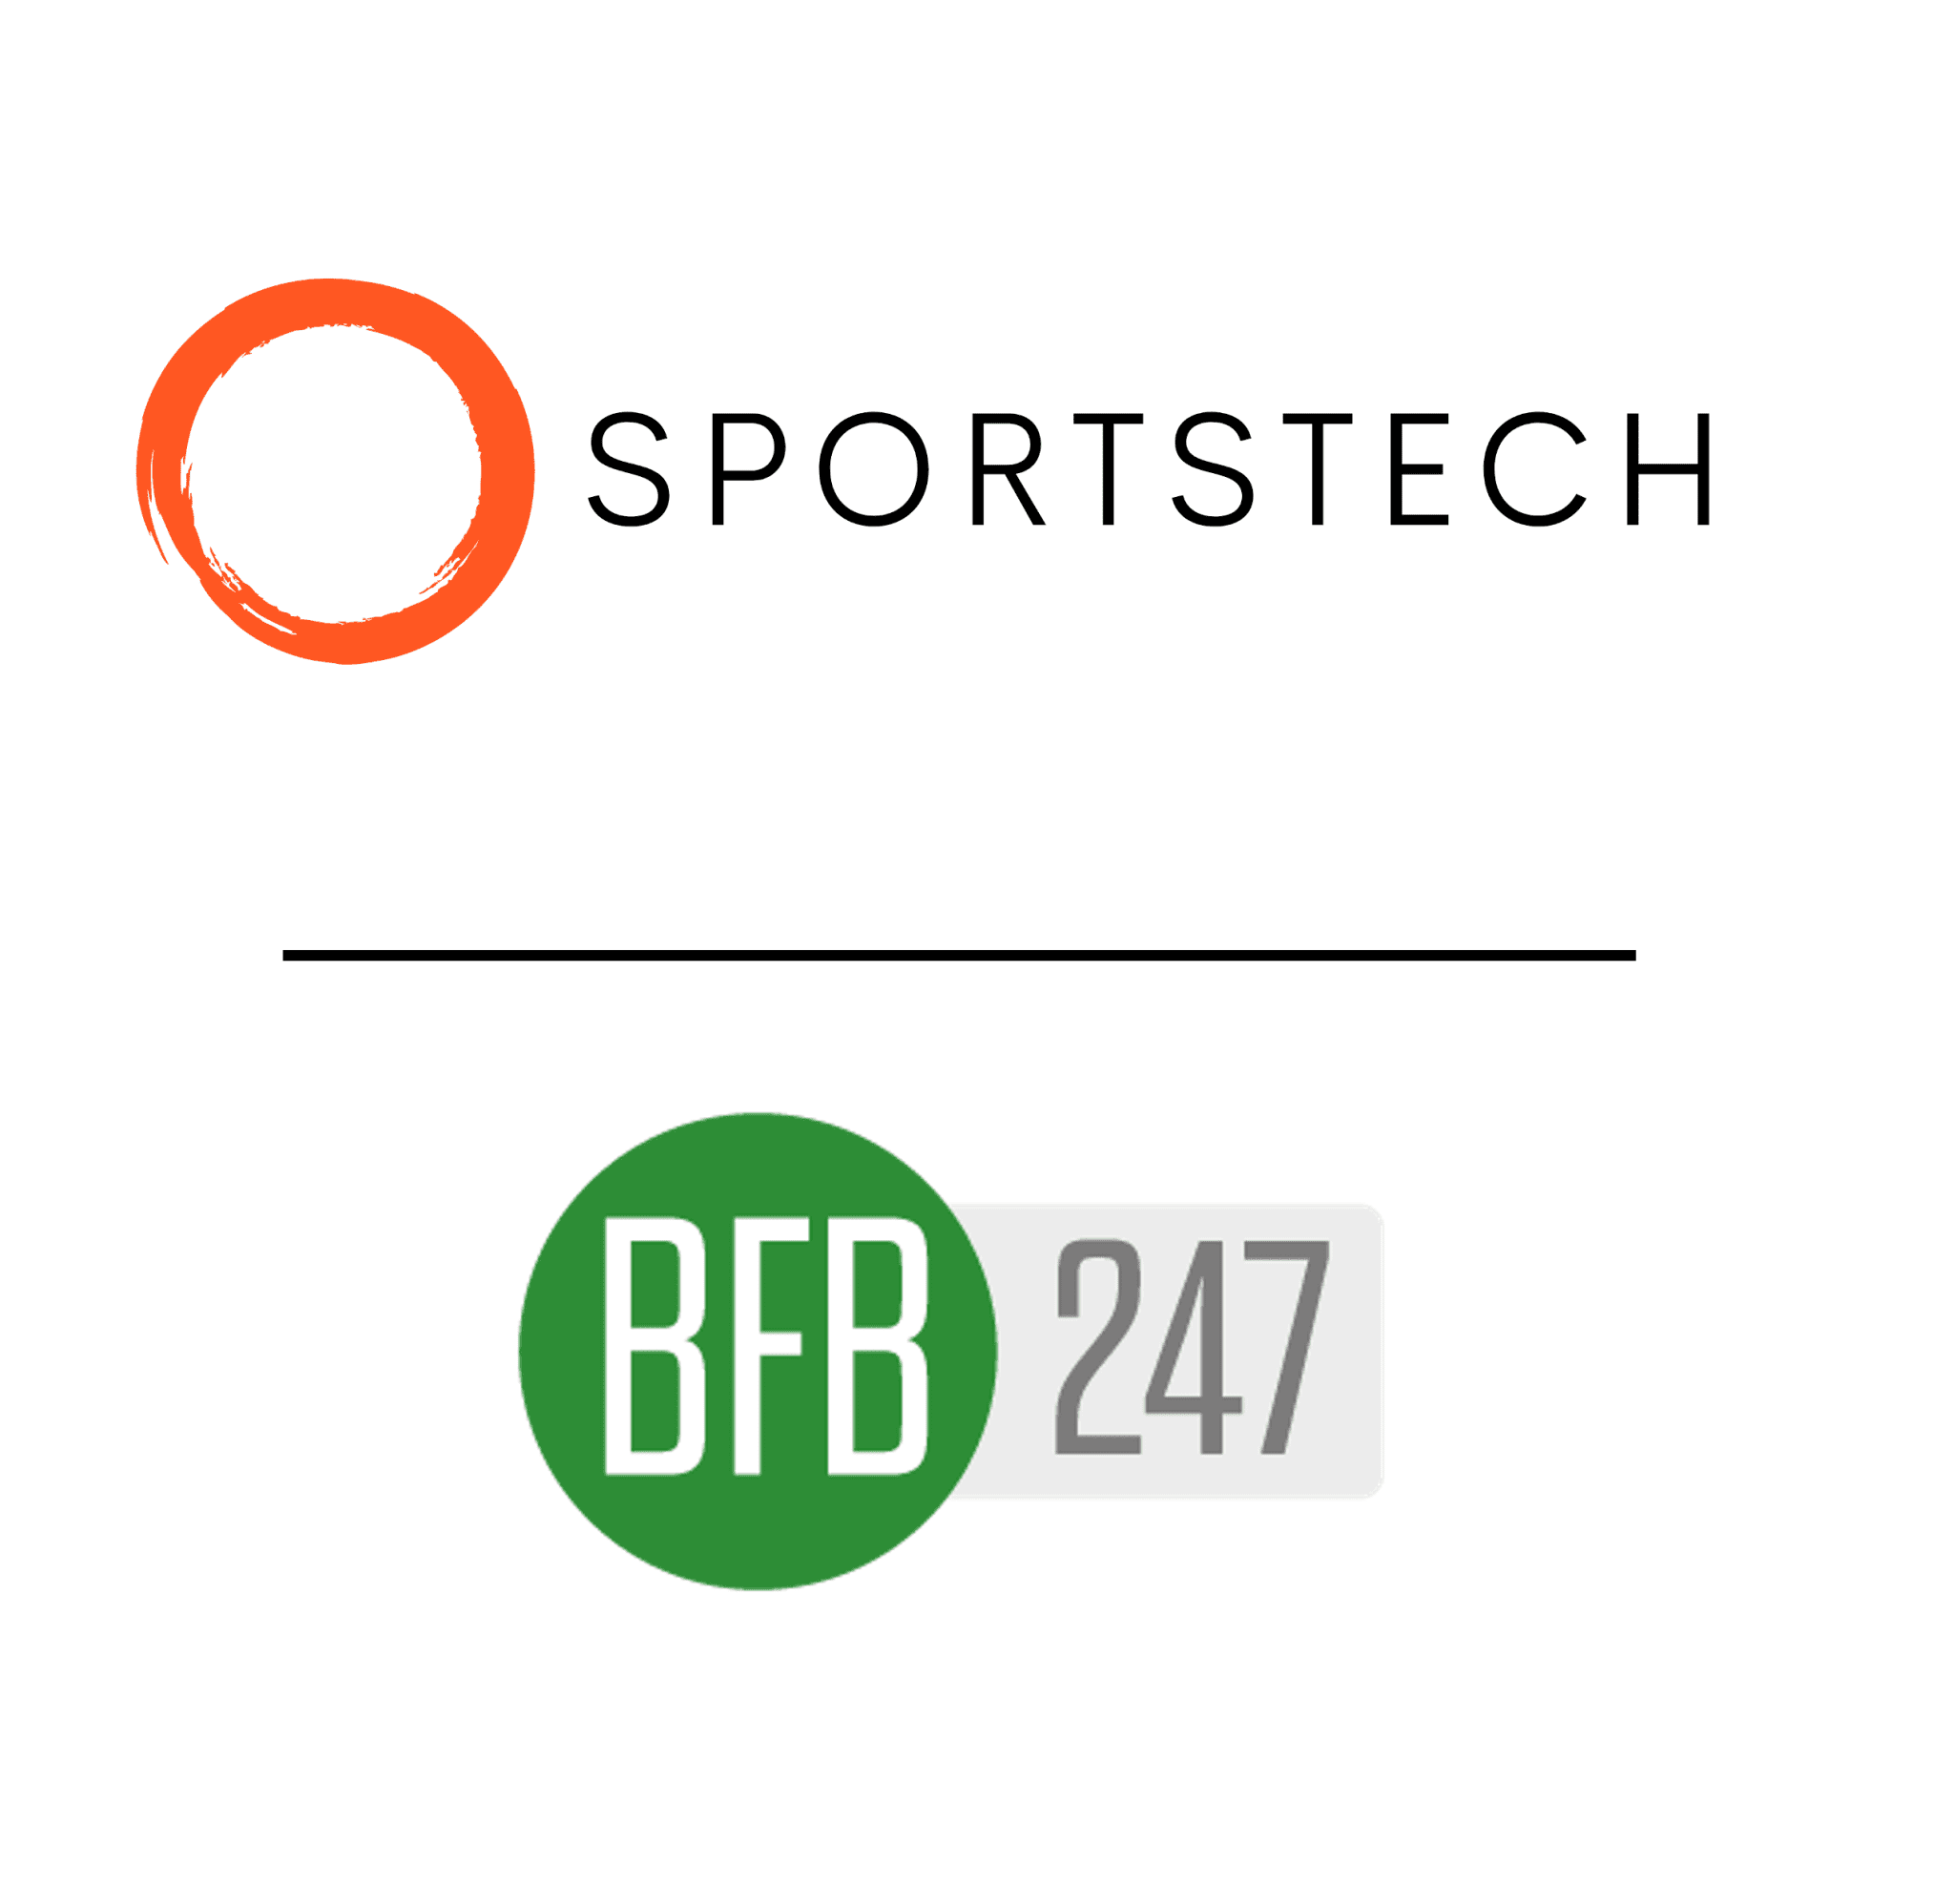 sportstech bfb logo